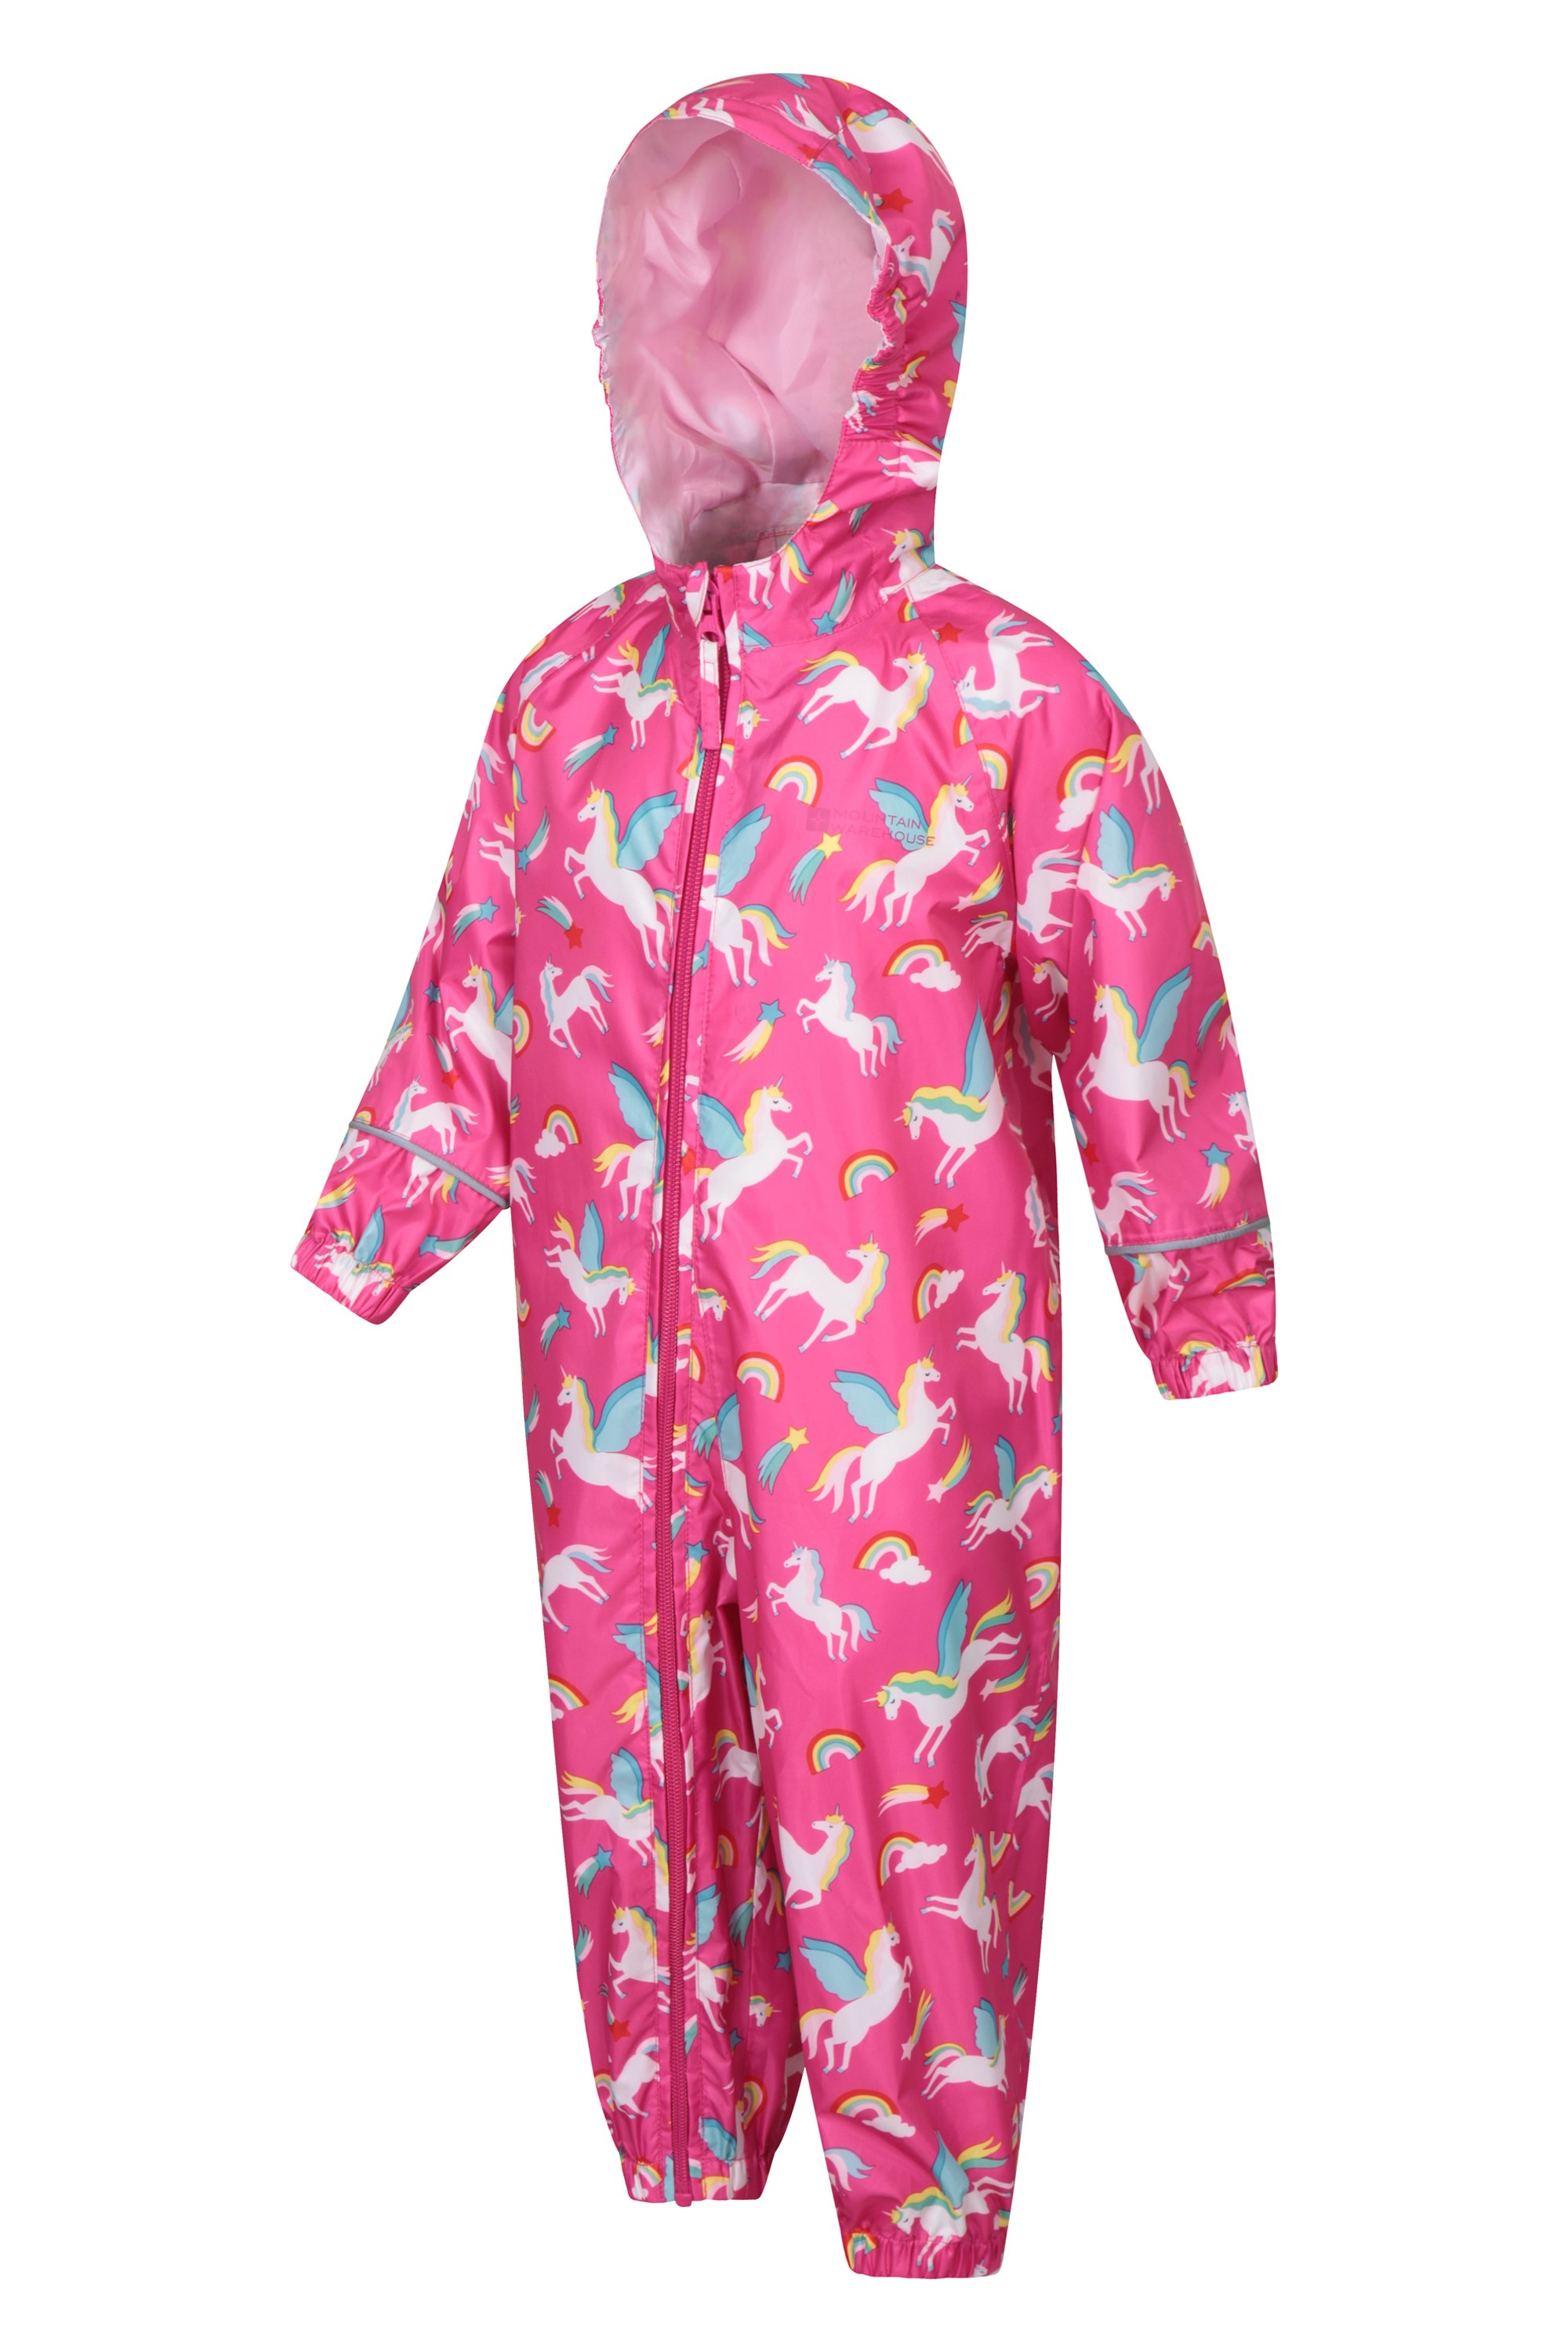 Mountain Warehouse Puddle Kids Waterproof Rain Suit 